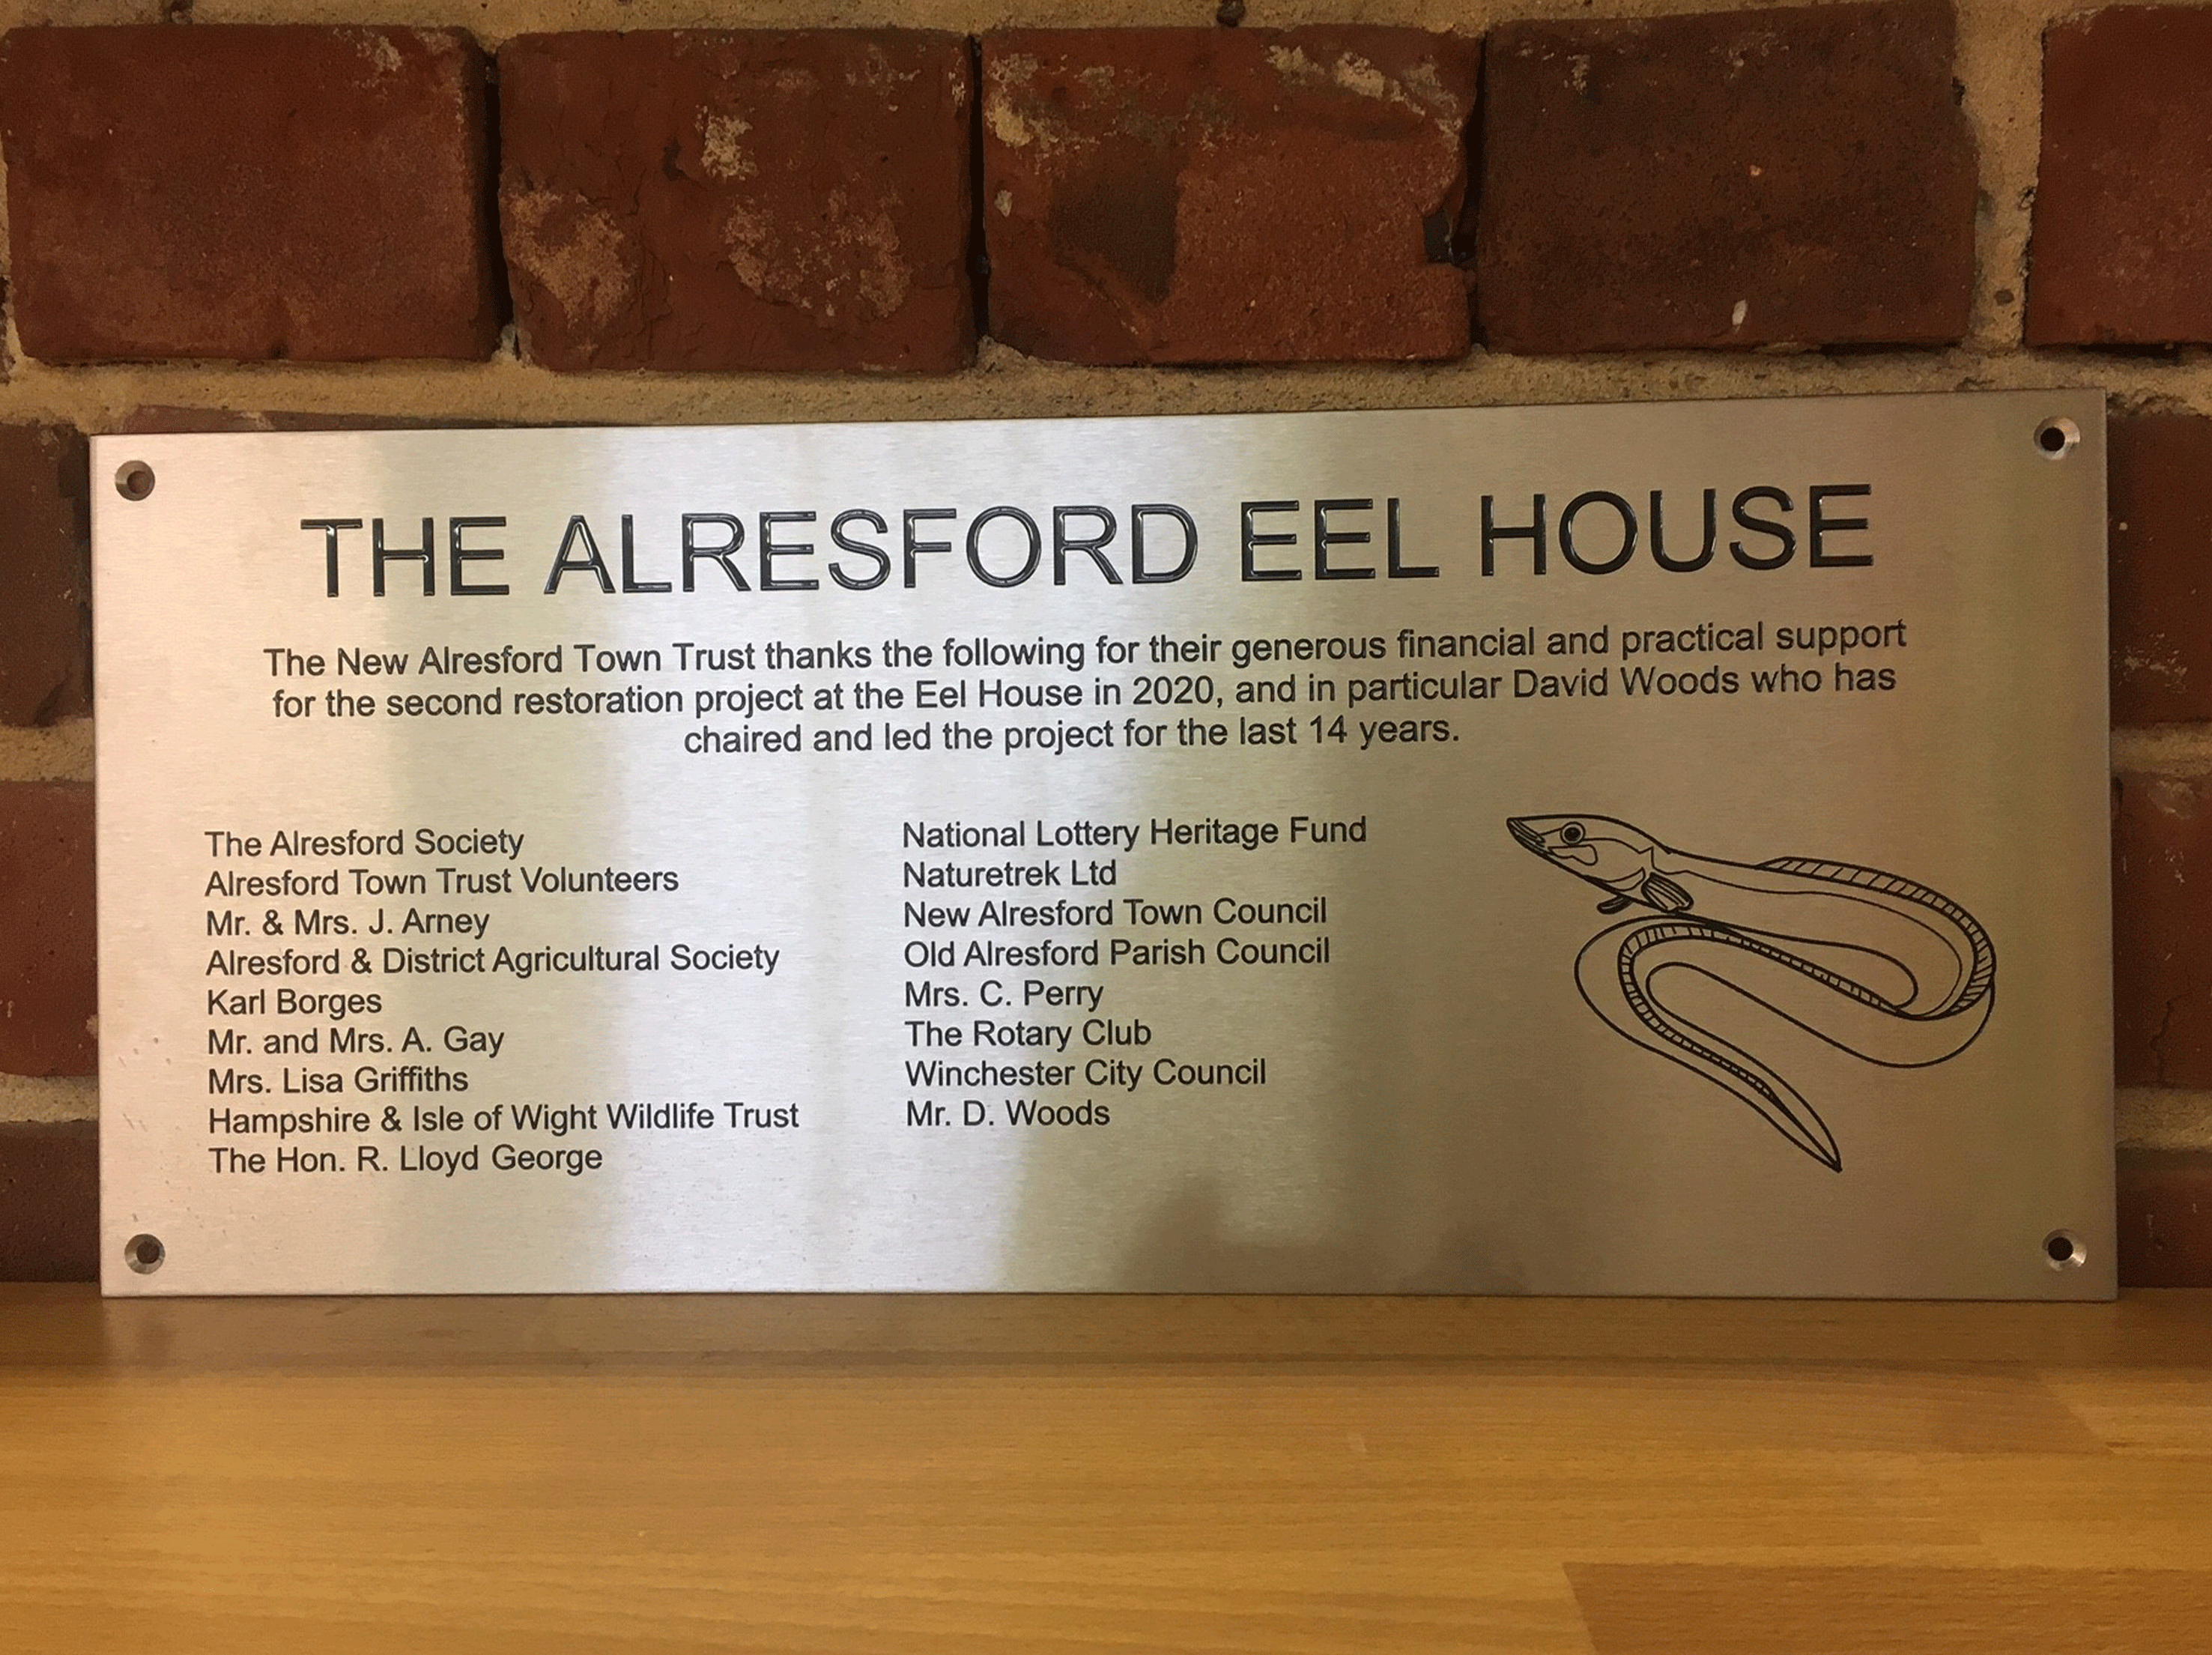 Building name plaque in stainless steel #alresfordeelhouse #alresford